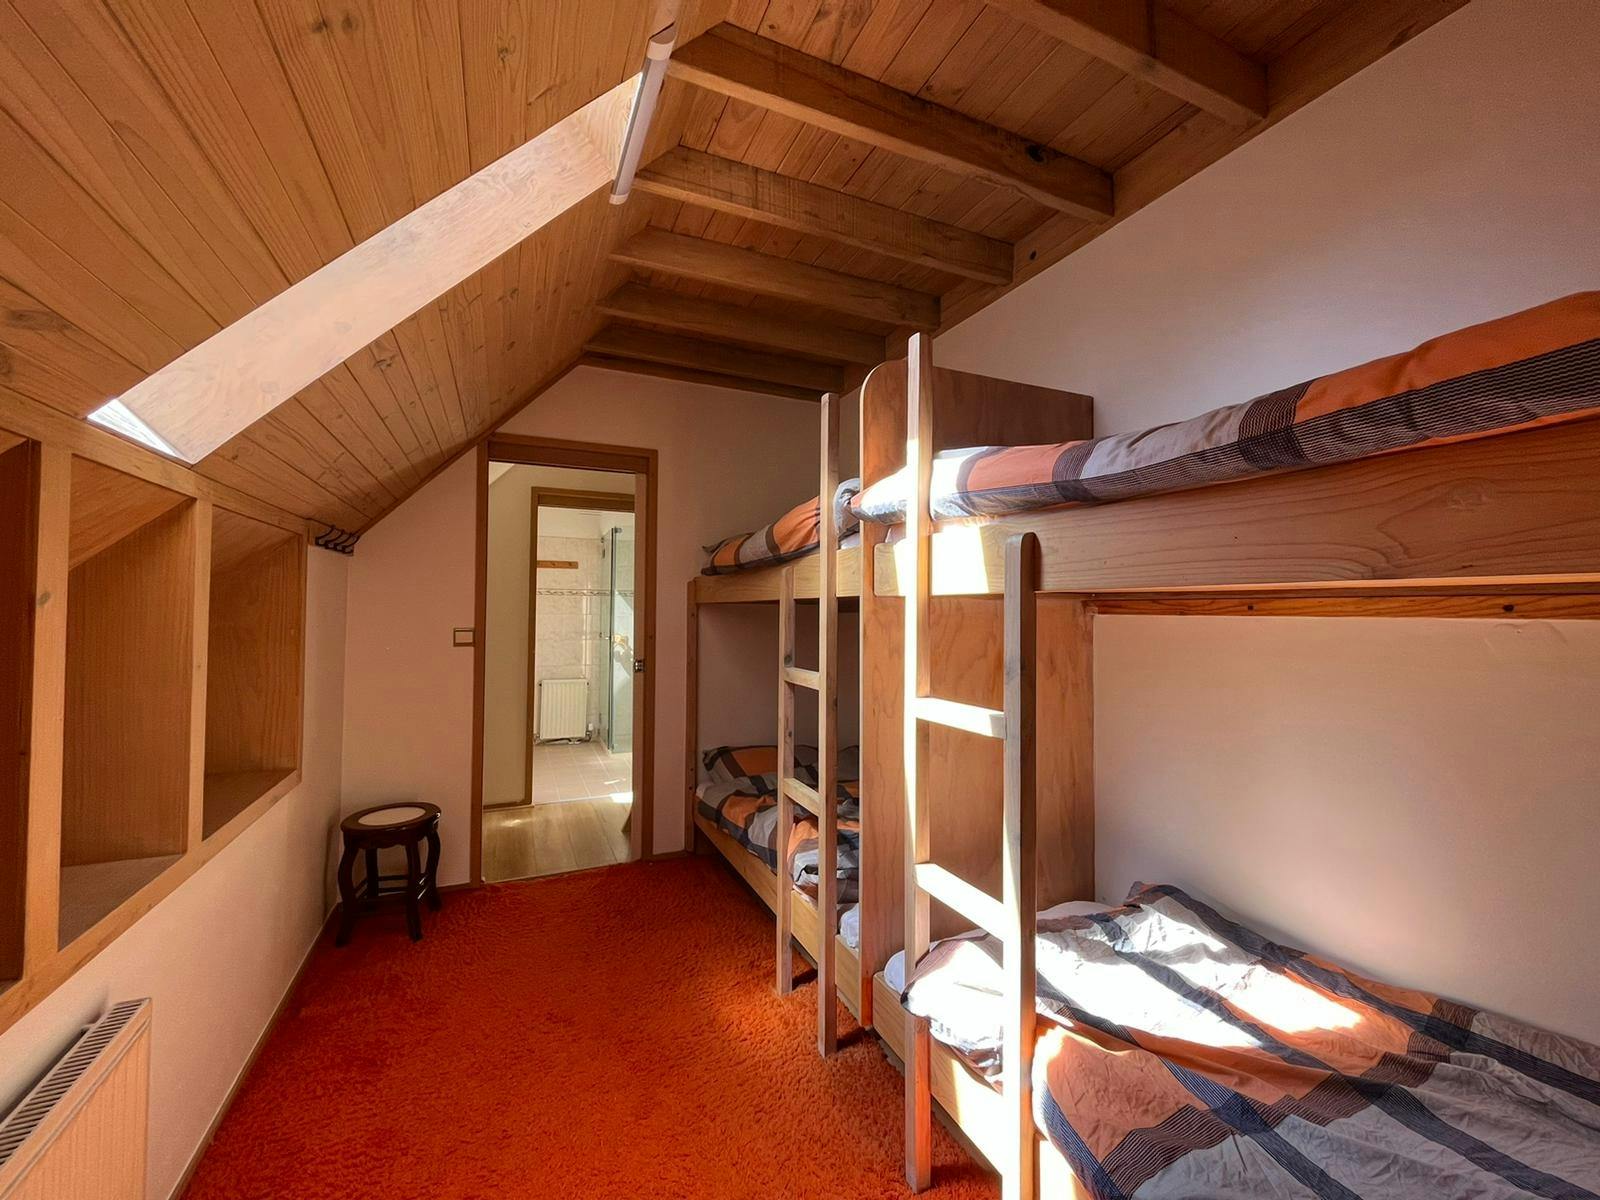 Snow accommodation bunk bed chalet lodge resort mt buller